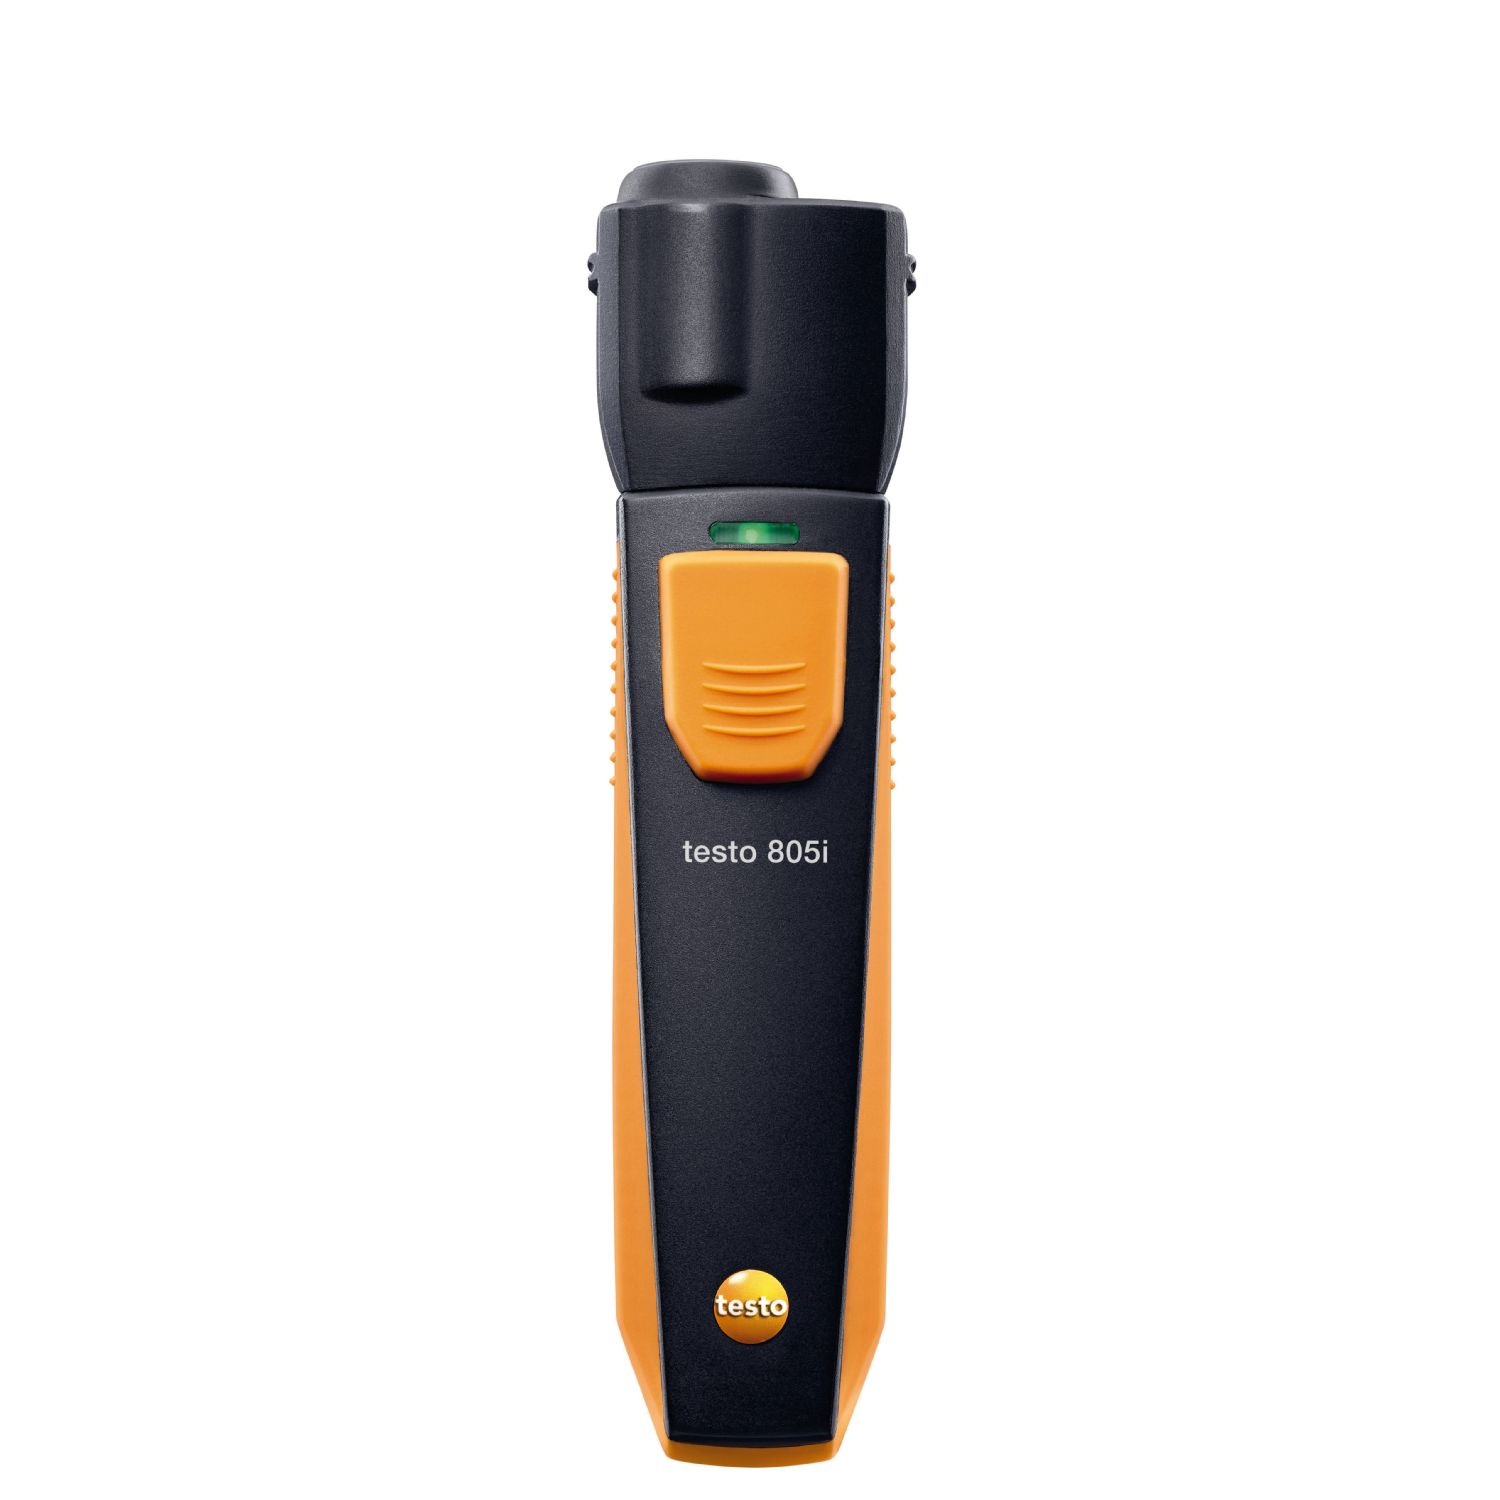 Testo 805 i - Infrarot-Thermometer mit Smartphone-Bedienung - 0560 1805